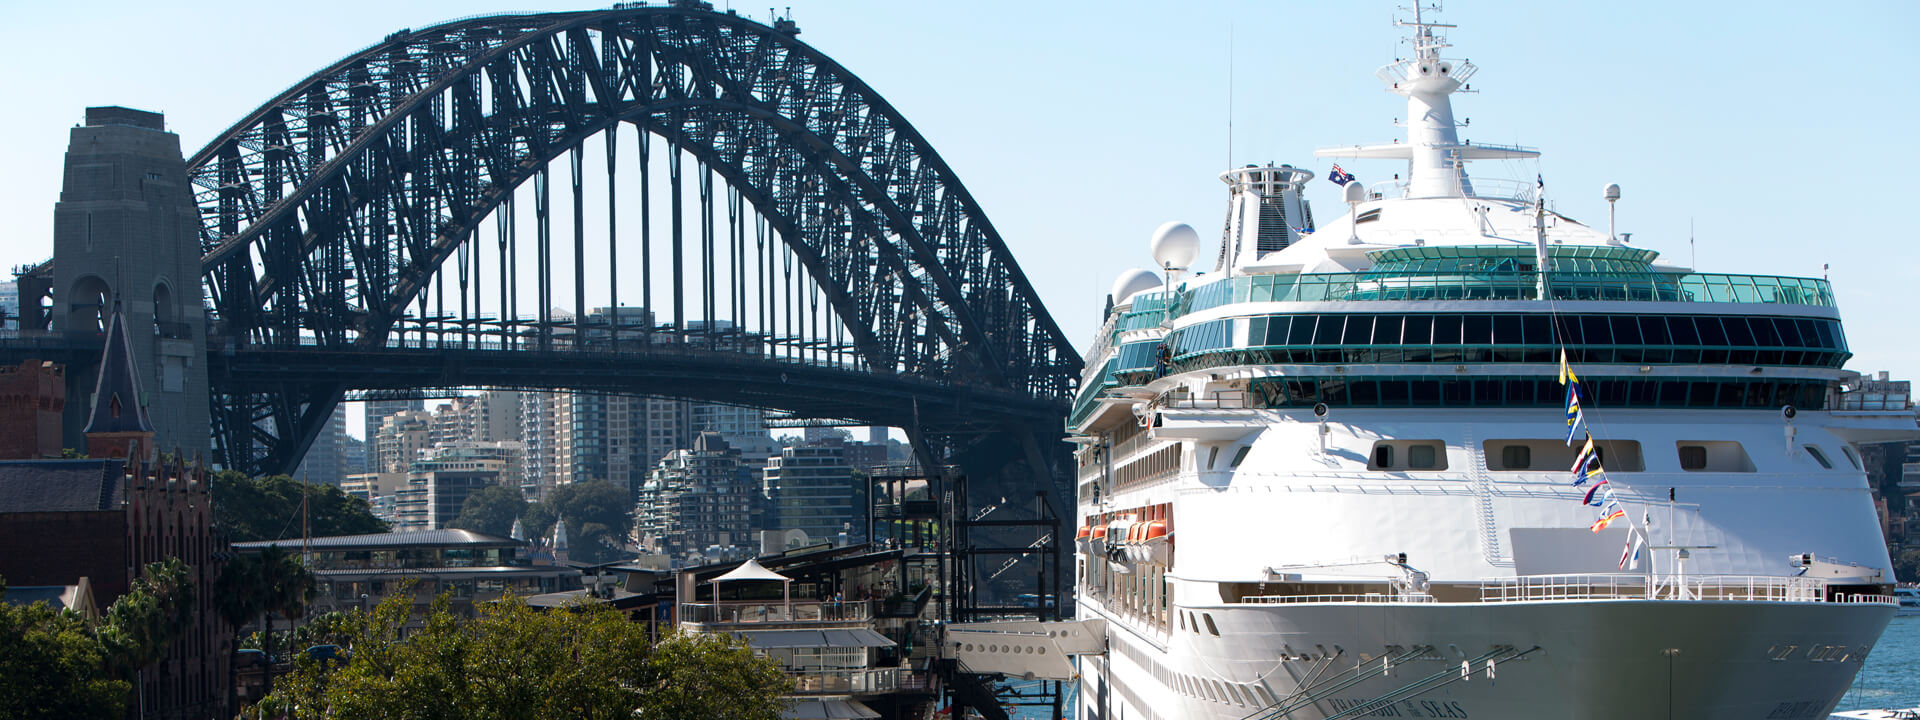 ferry in front of the Harbour Bridge in Sydney